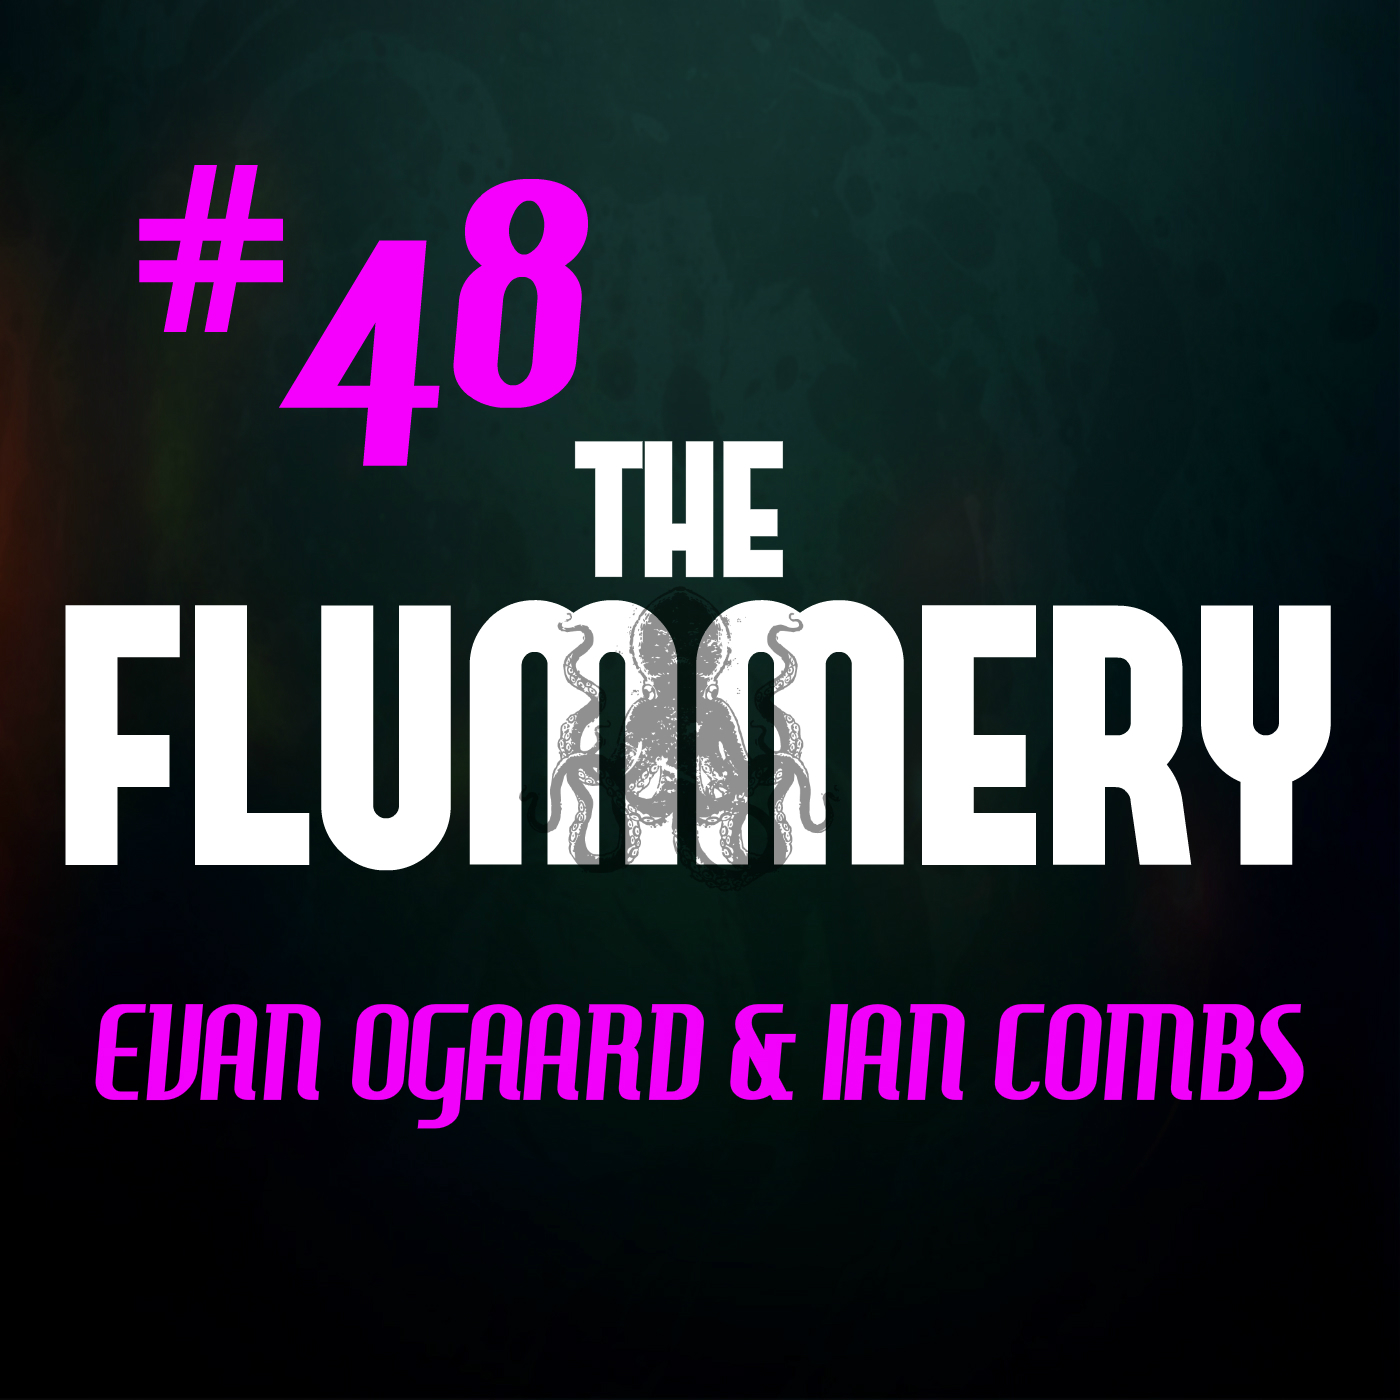 #48. Evan Ogaard and Ian Combs